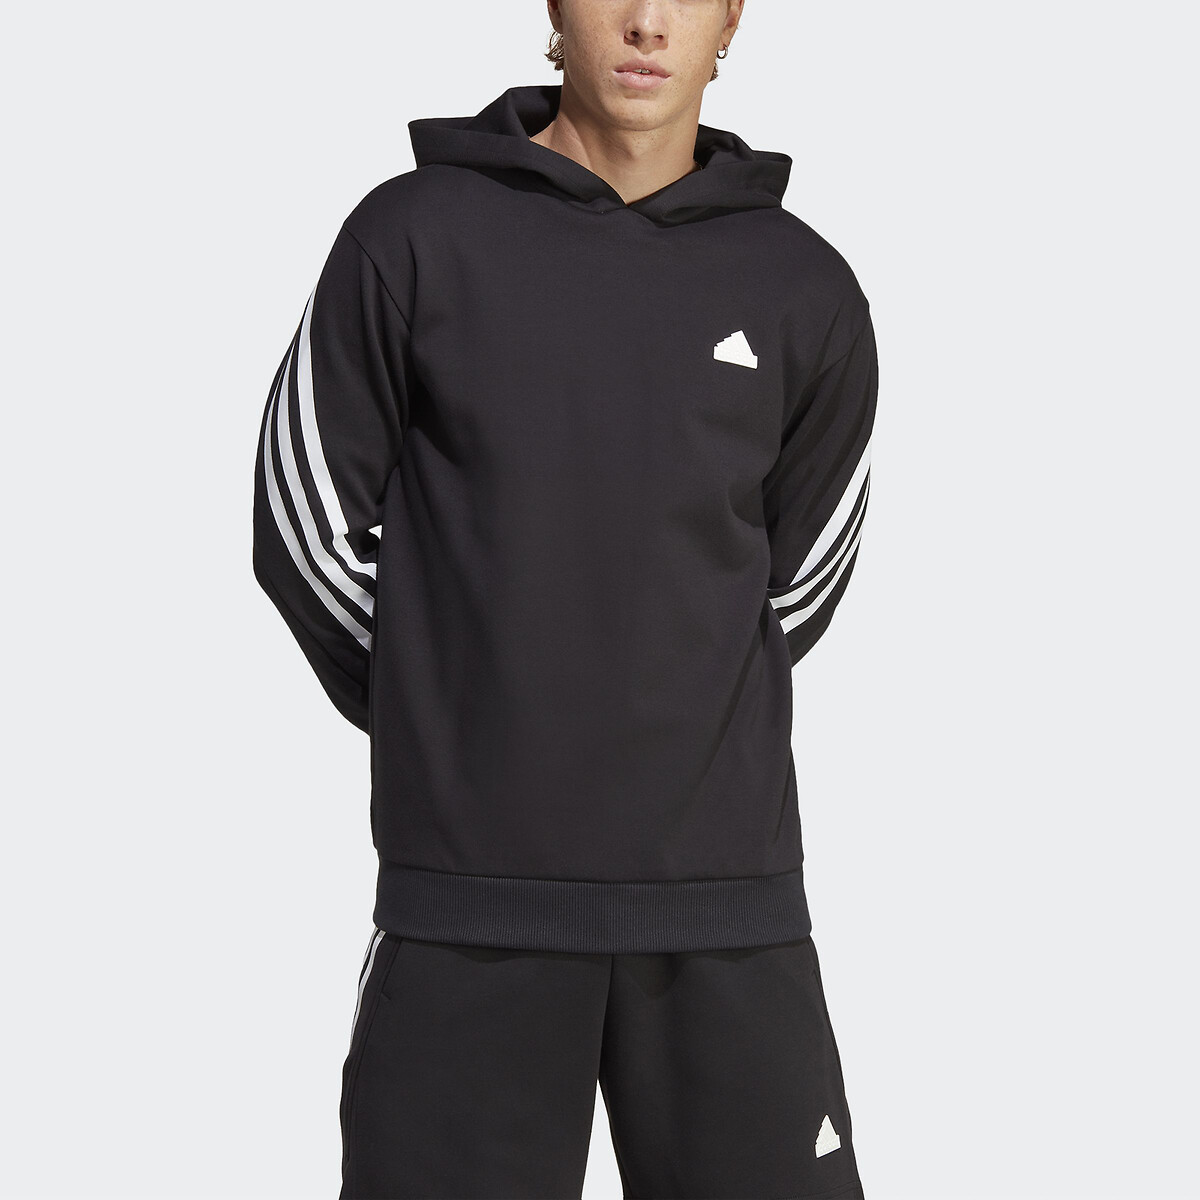 logostreifen den ärmeln Sportswear 3 an Adidas | La Redoute schwarz Kapuzensweatshirt,